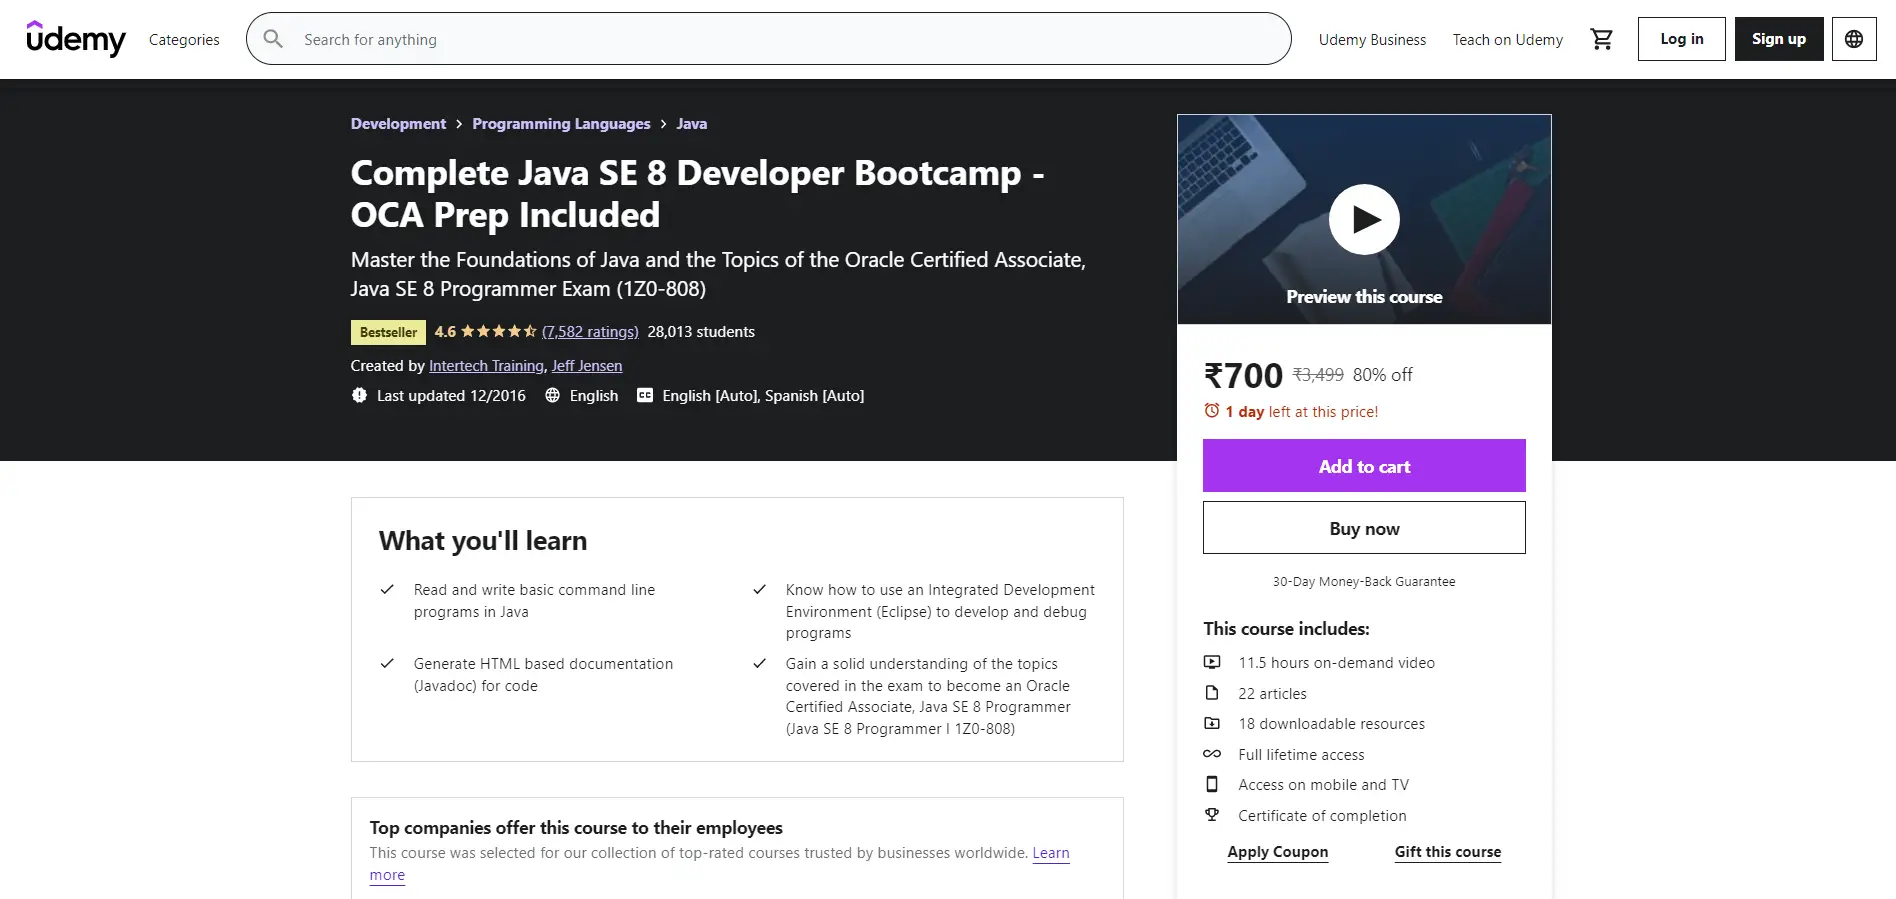 Complete Java SE 8 Developer Bootcamp - OCA Prep Included